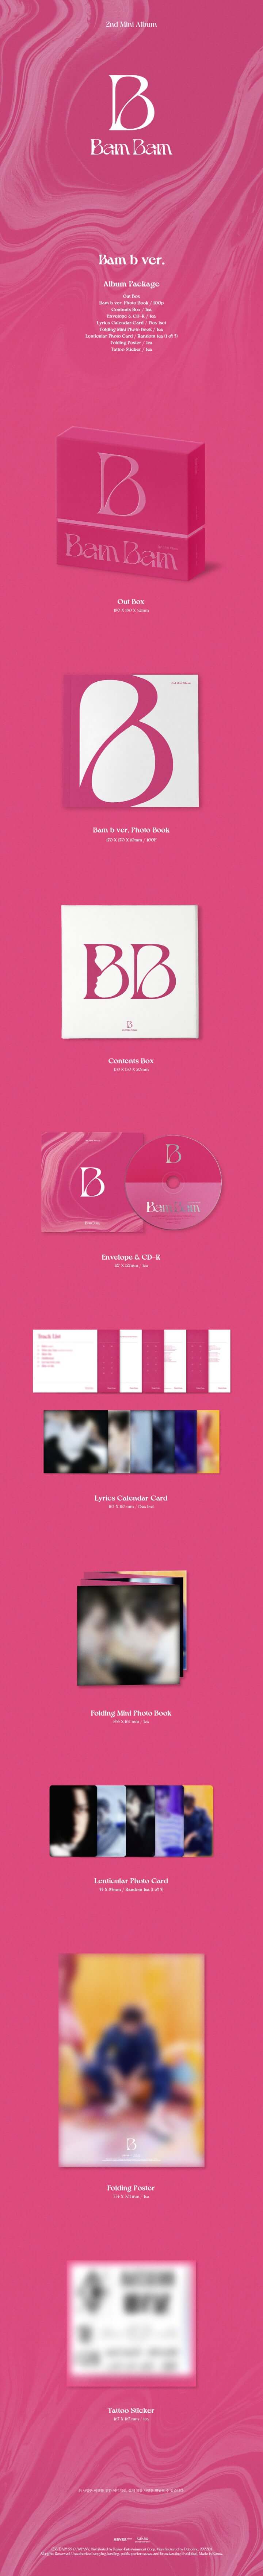 BAMBAM - B (2nd Mini Album)